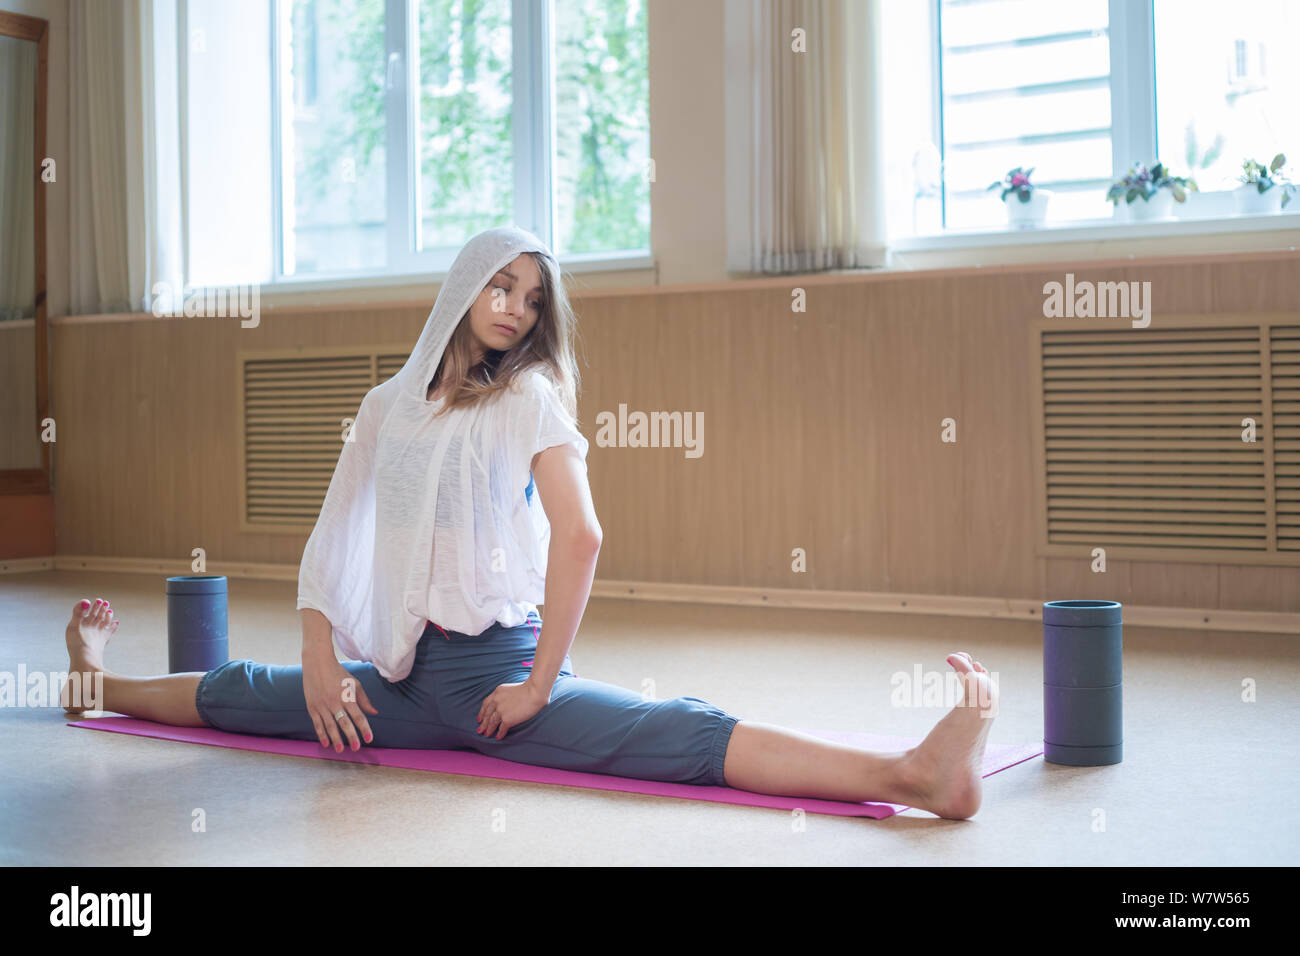 https://c8.alamy.com/comp/W7W565/young-slim-woman-with-blonde-hair-sitting-on-the-yoga-mat-in-horizontal-split-dance-studio-W7W565.jpg